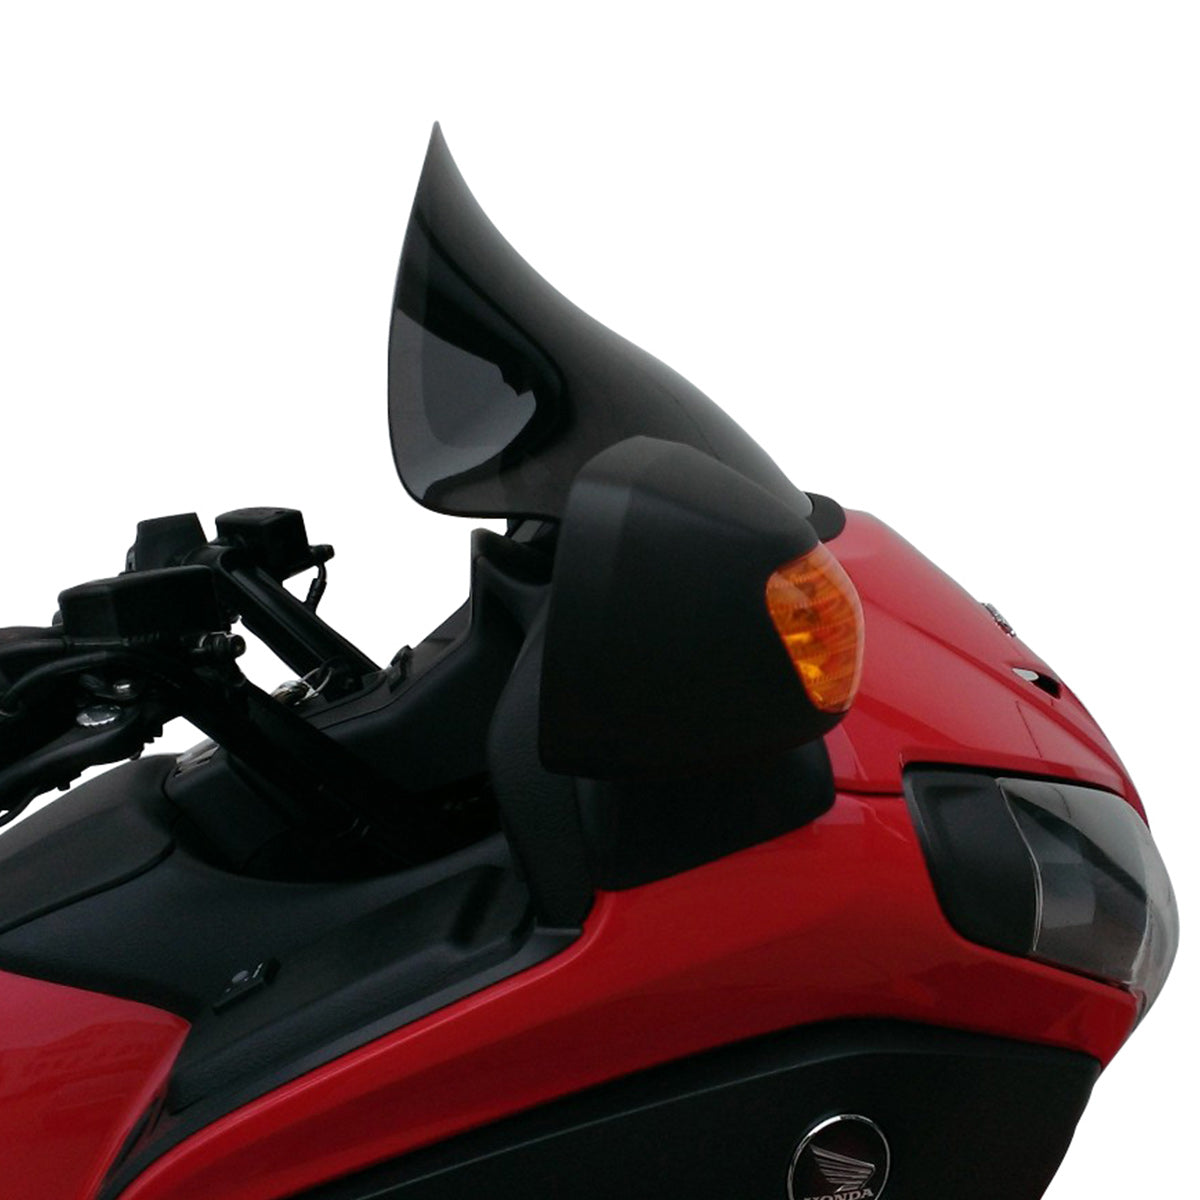 14" Dark Smoke Flare™ Windshield for Honda® 2013-2016 F6B motorcycle models